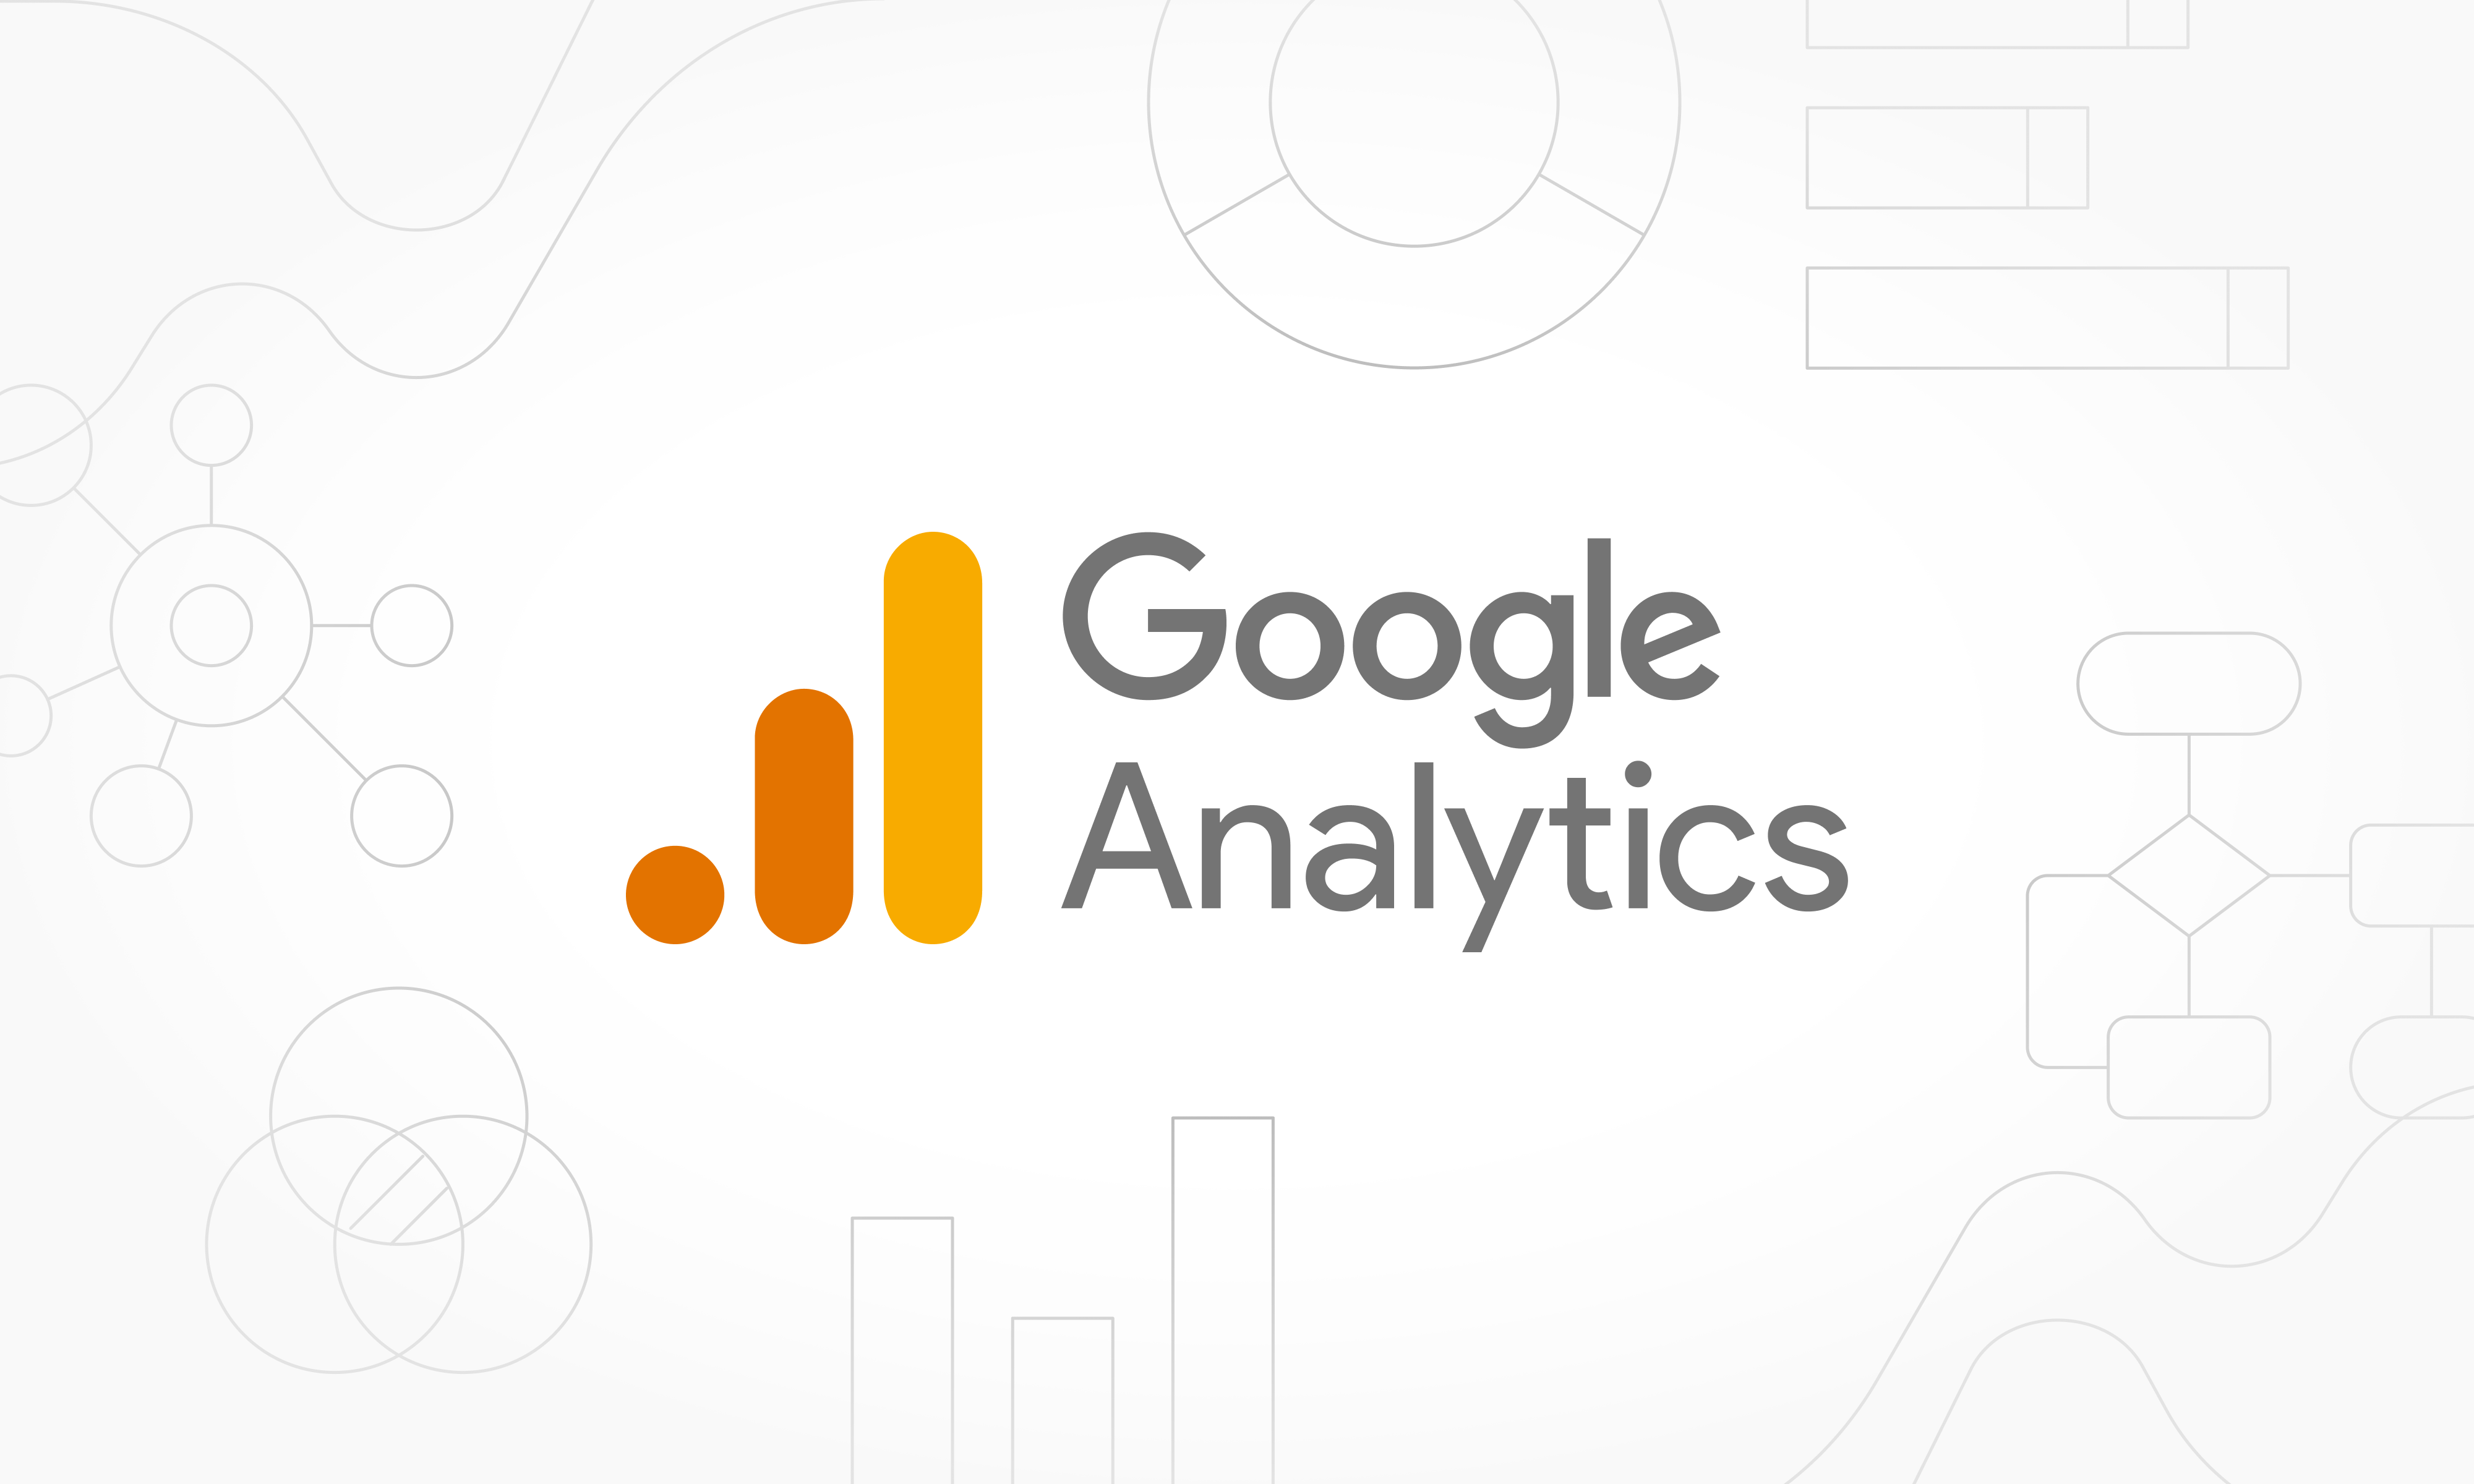 Google analytics logo around analytics illustrations